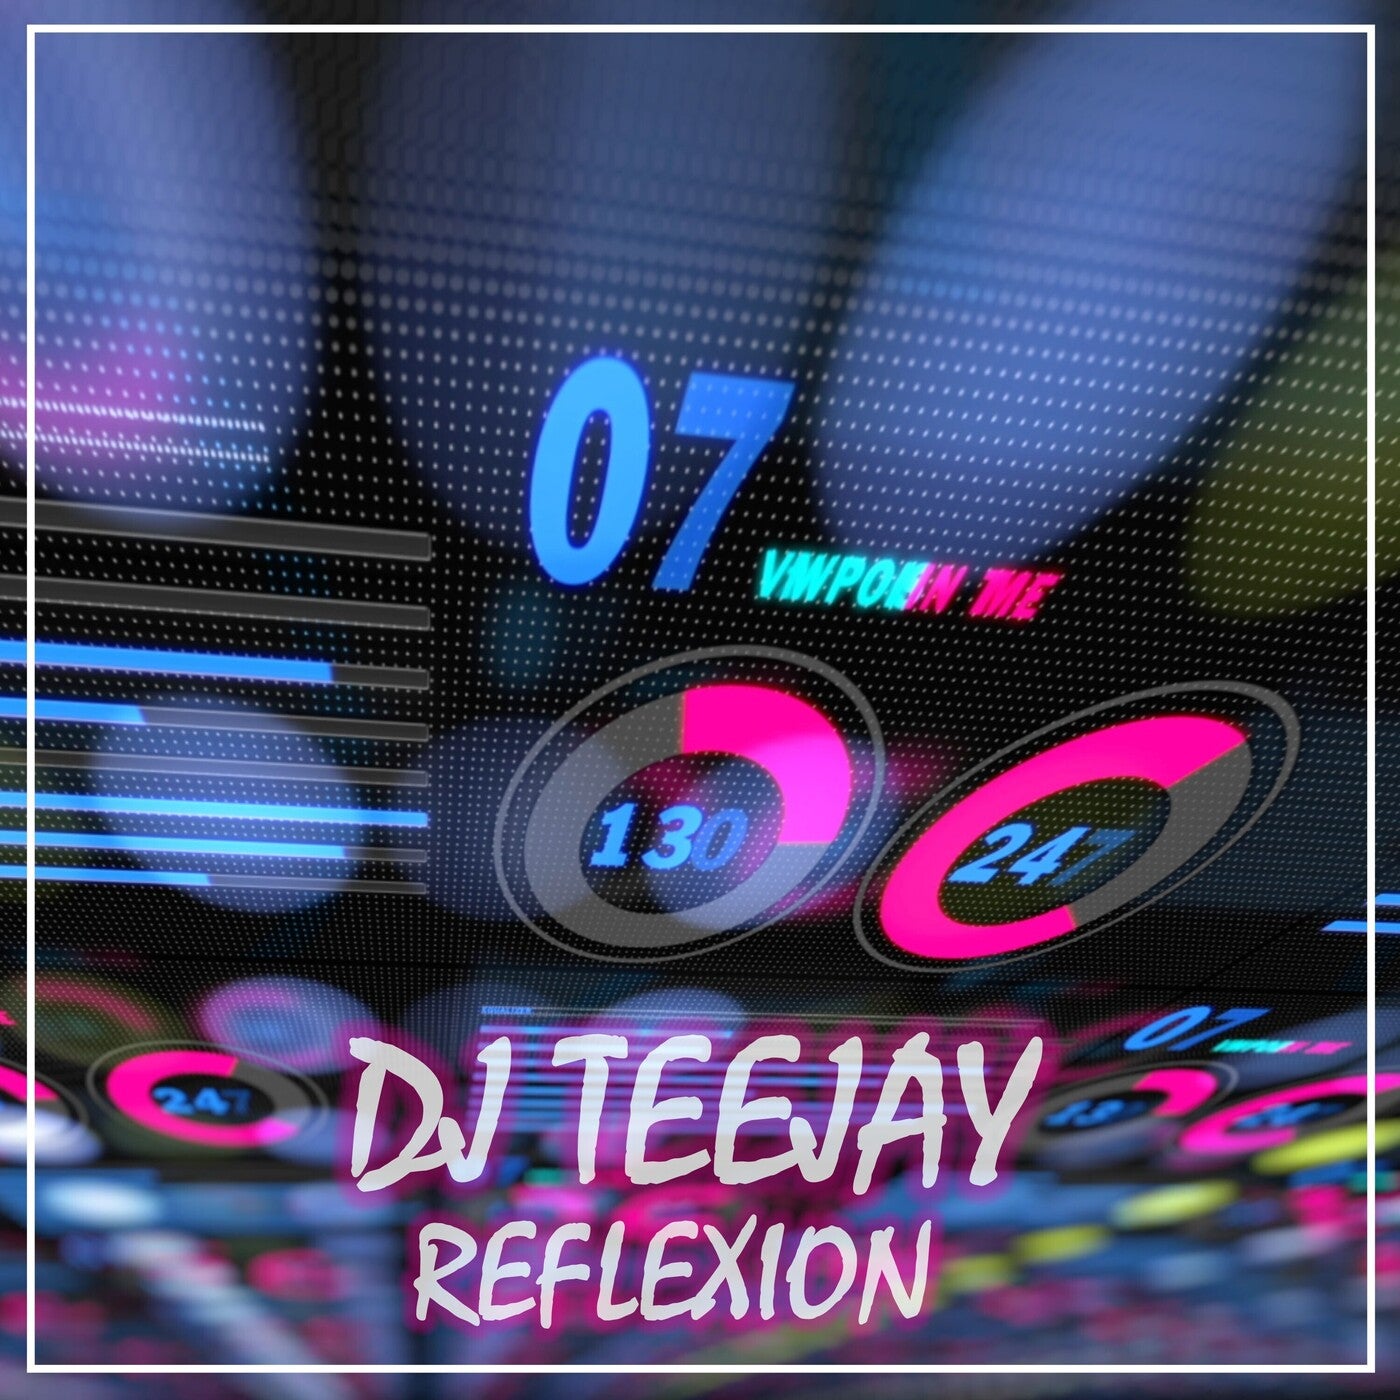 Reflexion (Extended Mix) by DJ TEEJAY on Beatport